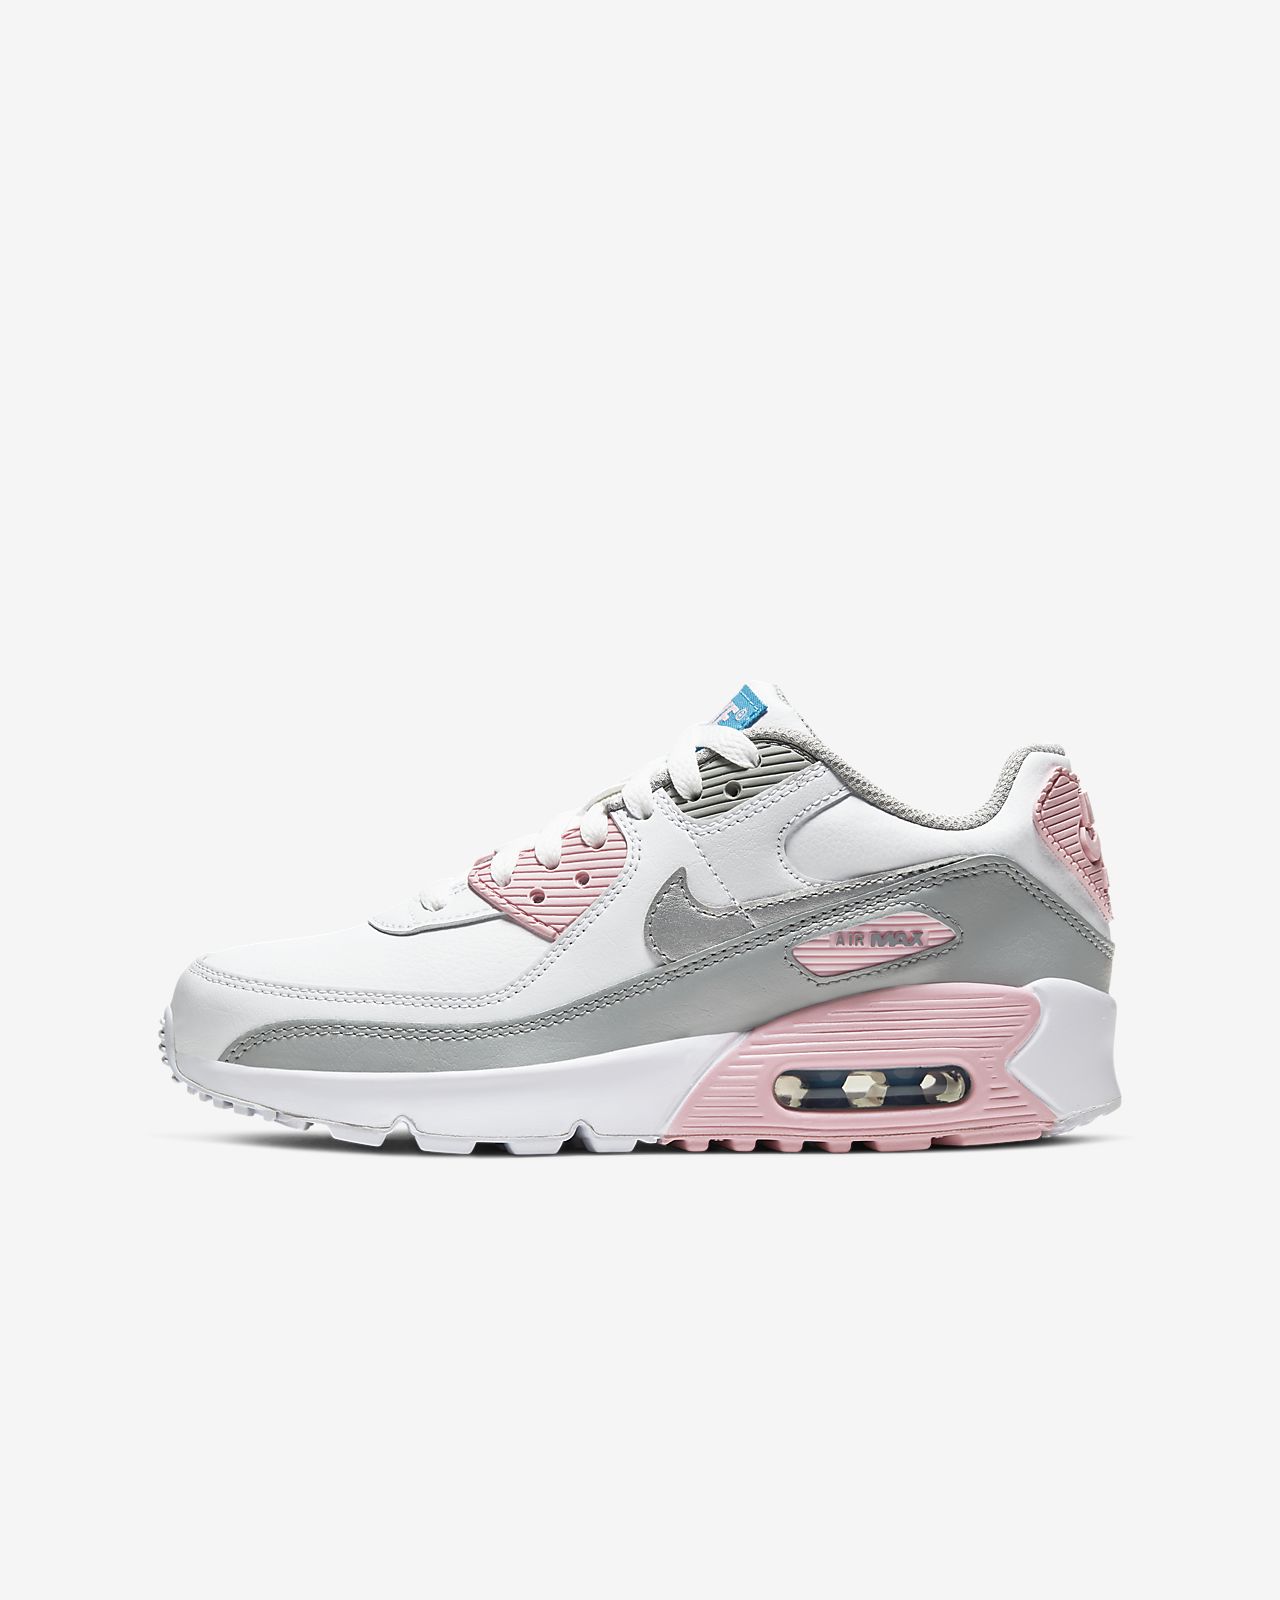 nike air max pink grey white